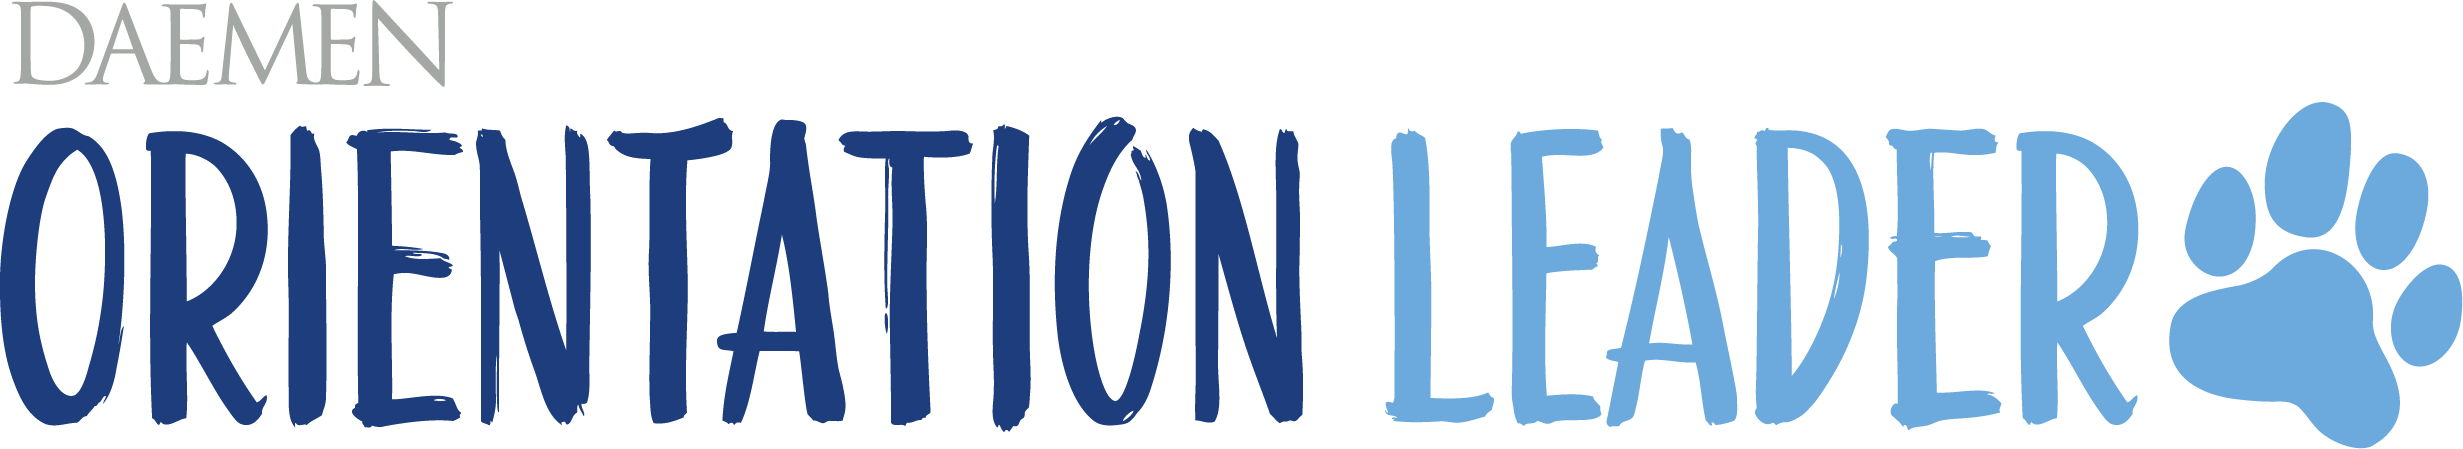 Orientation Leader Logo